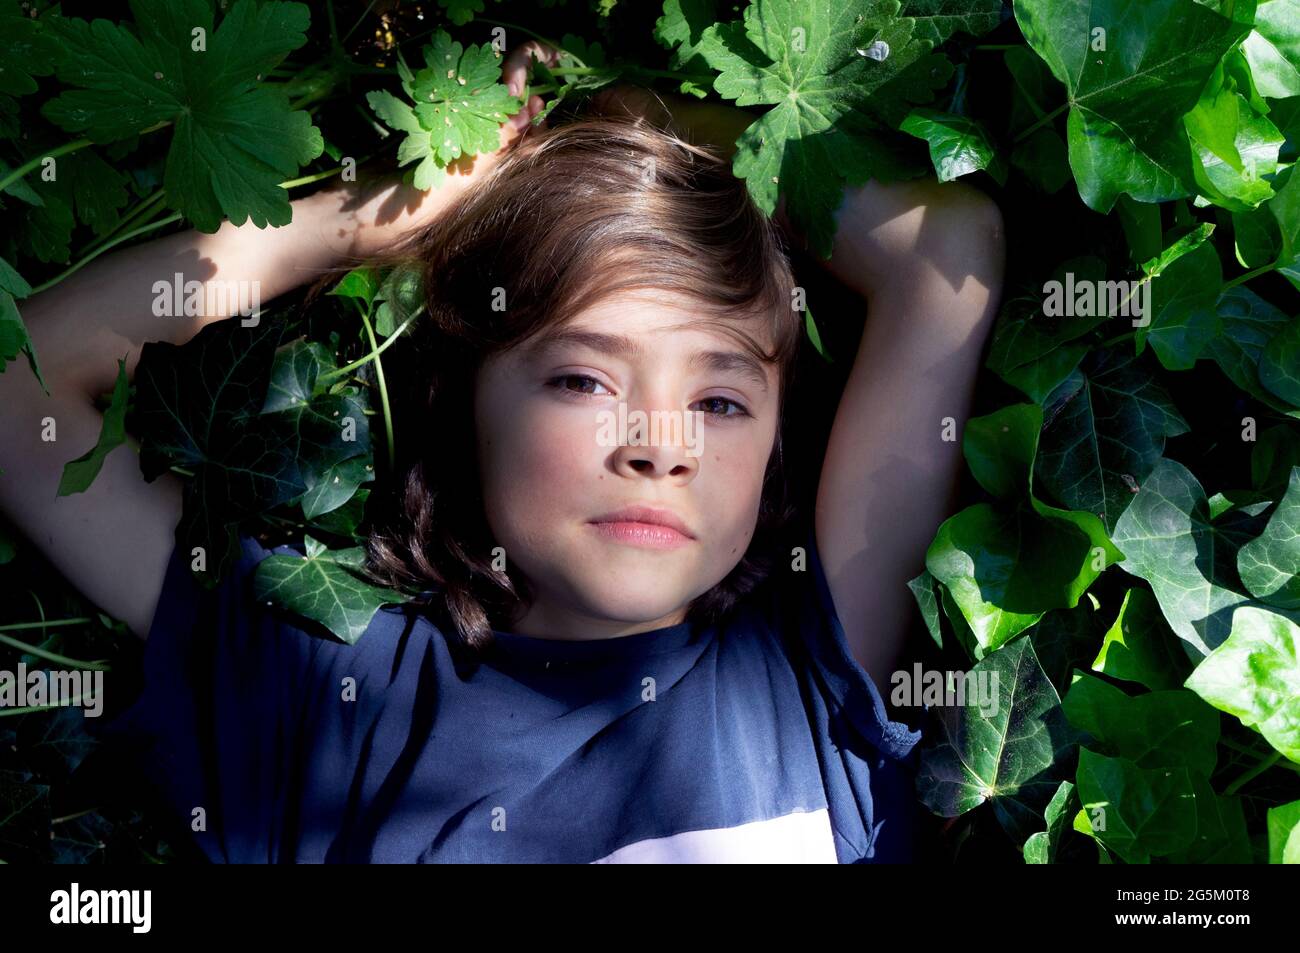 boy lying in green bushes Stock Photo